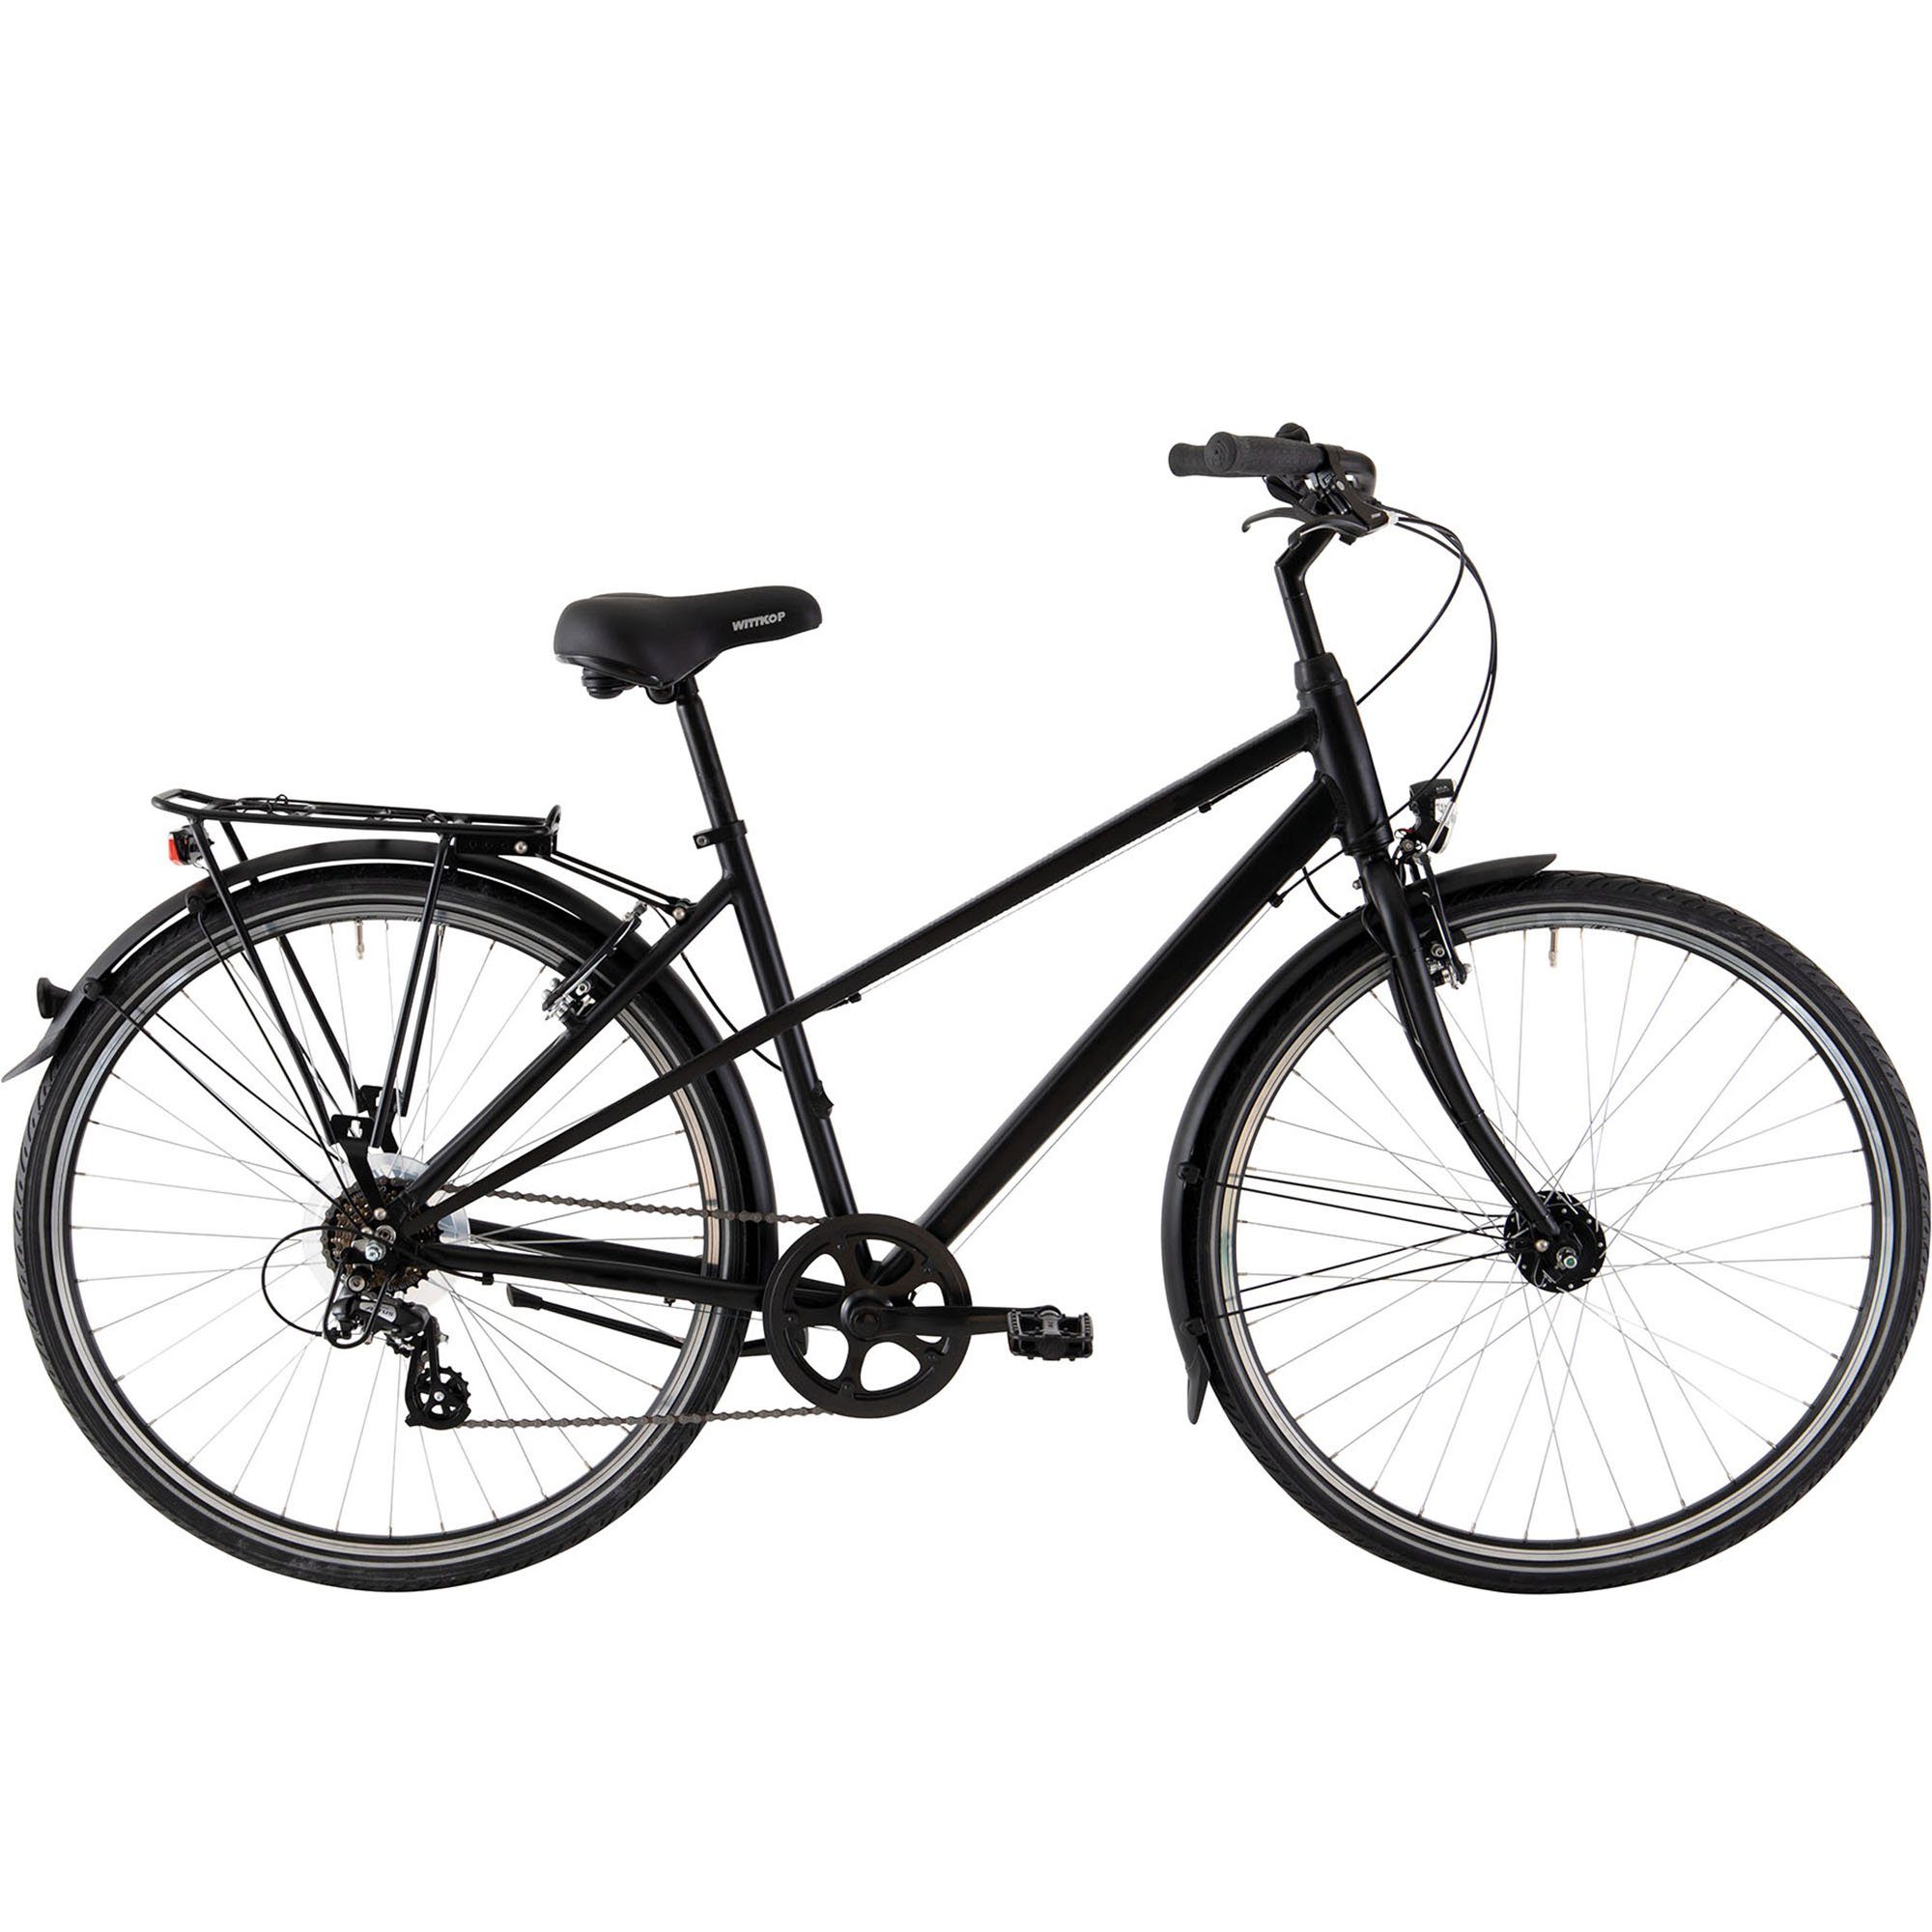 Gang Damenfahrrad Shimano Tourenrad - Bikes 170 190 Altus Zoll BBF 28 retro Trekkingrad City Damen Line, Black 7 Schaltwerk, Kettenschaltung, Fahrrad cm